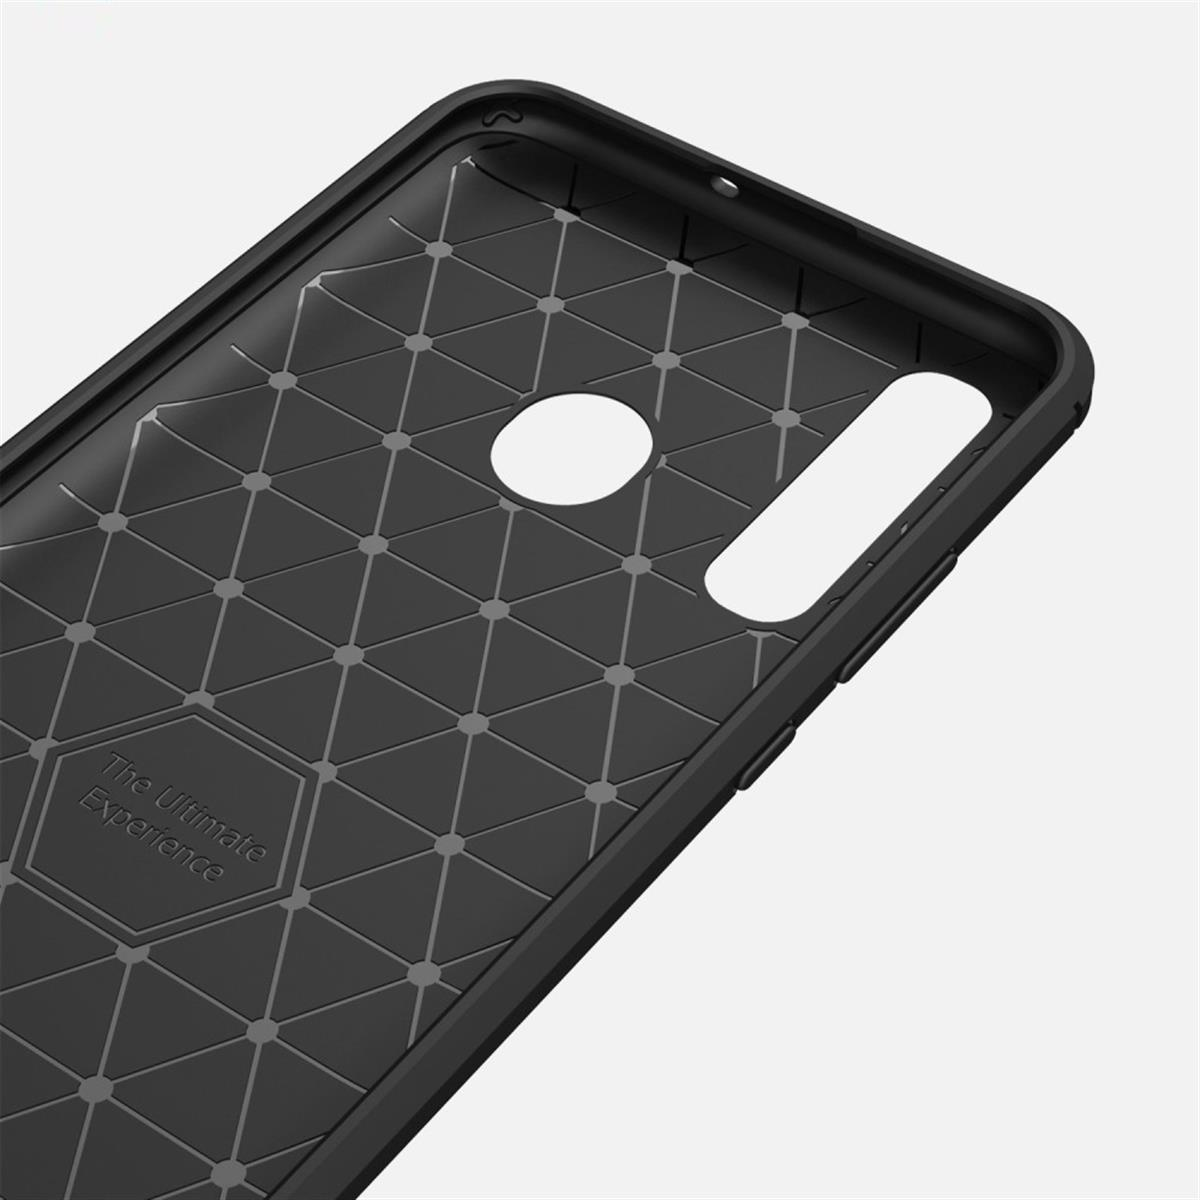 Backcover, Carbon Handycase Plus Look, im P Huawei, Smart COVERKINGZ schwarz 2019,